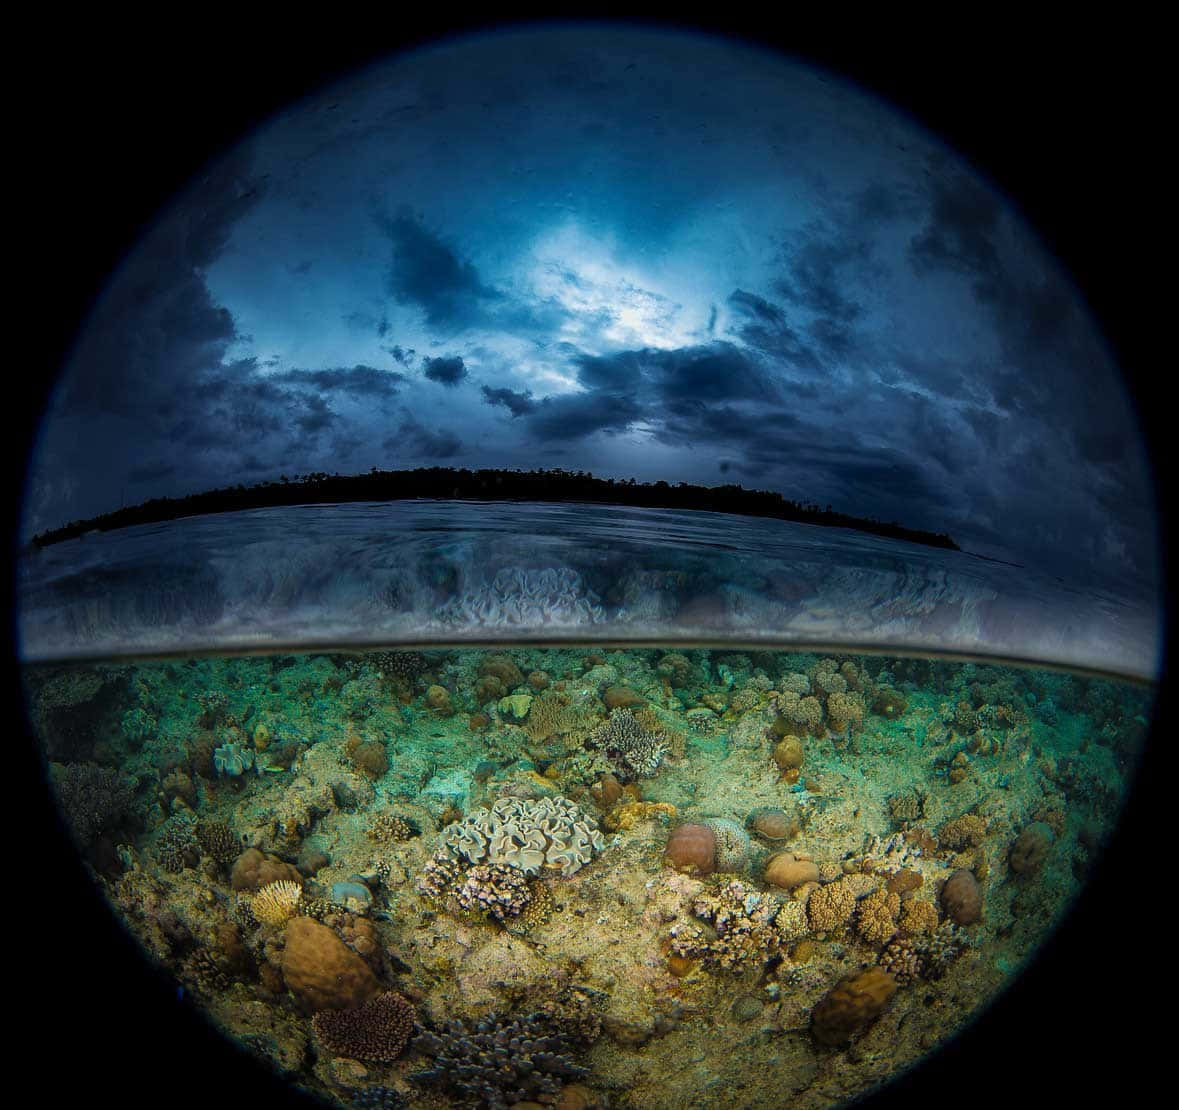 An awe-inspiring perspective of the horizon as seen through a fisheye lens